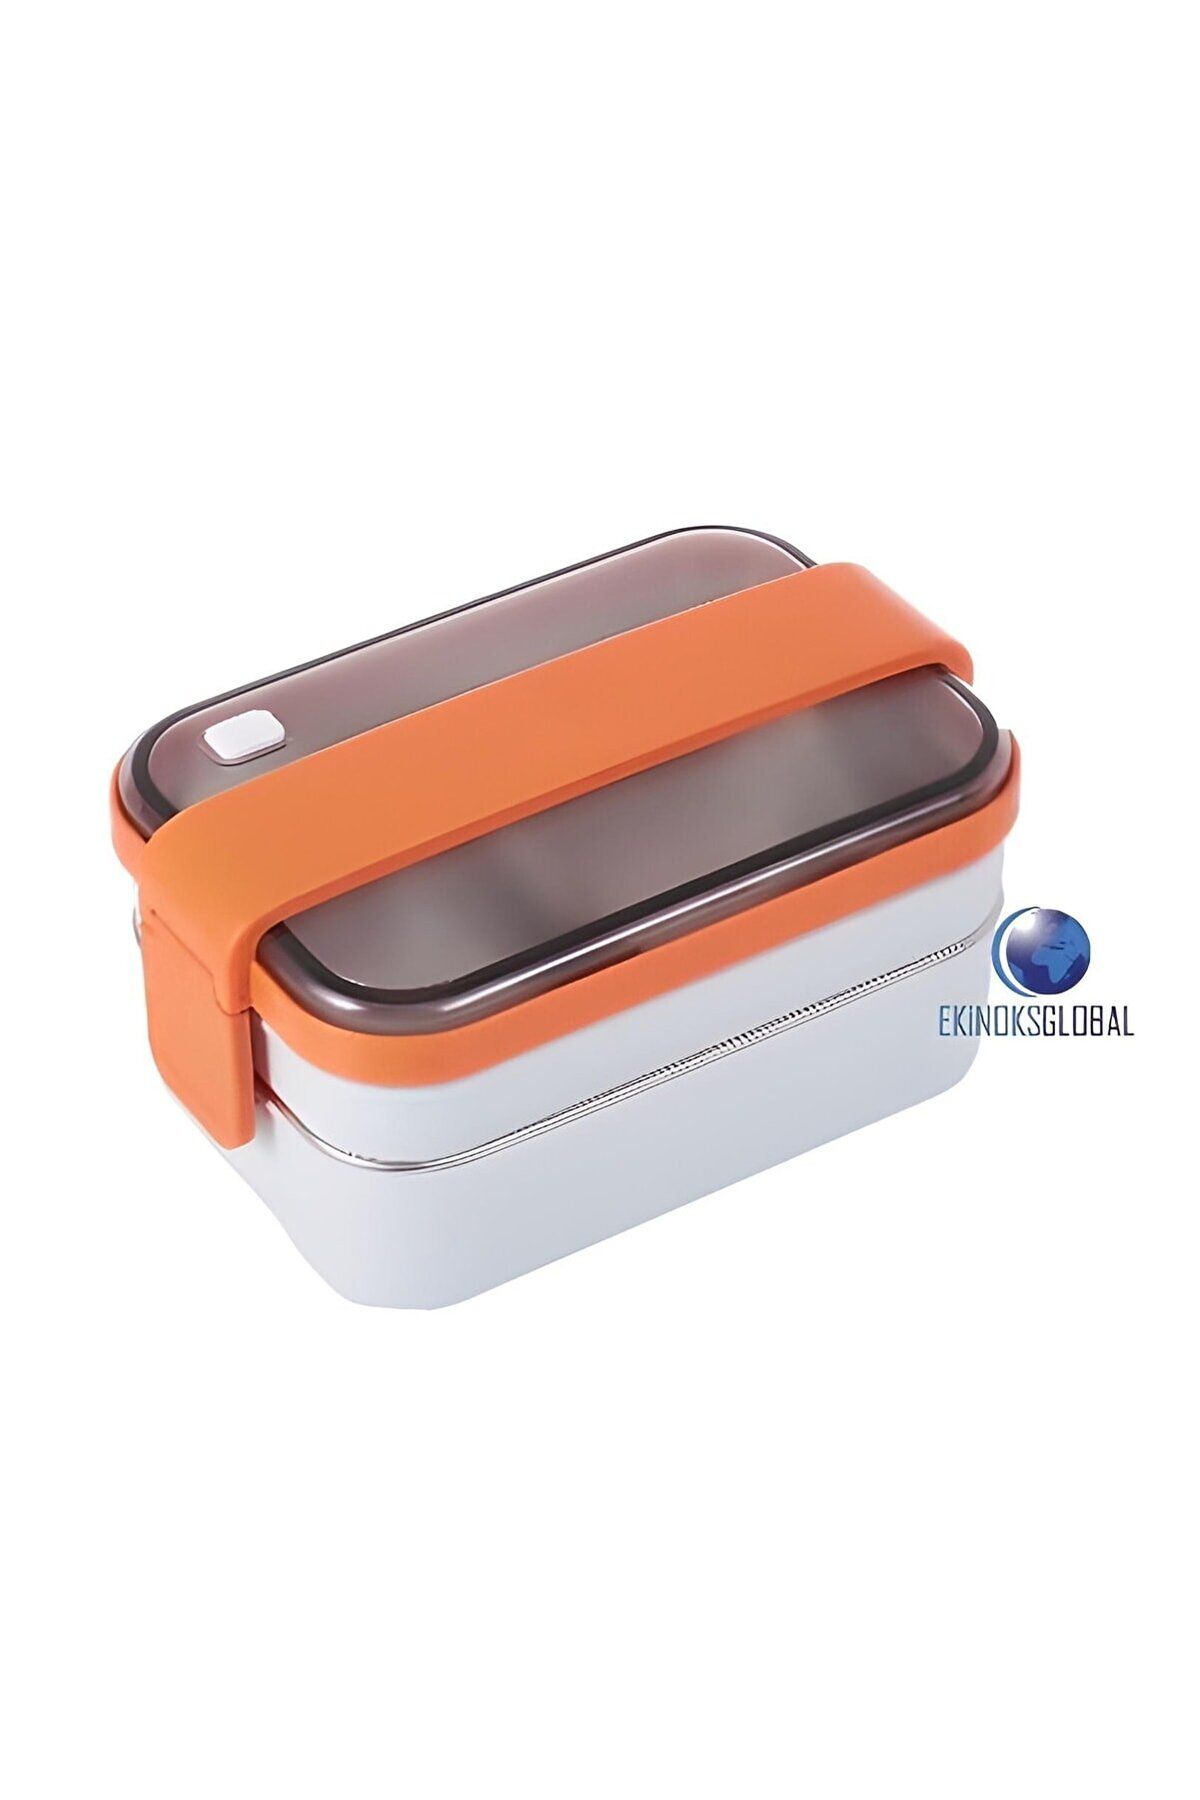 Vagon Karma Çelik Lunch Box Yemek Kutusu (Beslenme Kutusu) 1200 Ml Bl20183